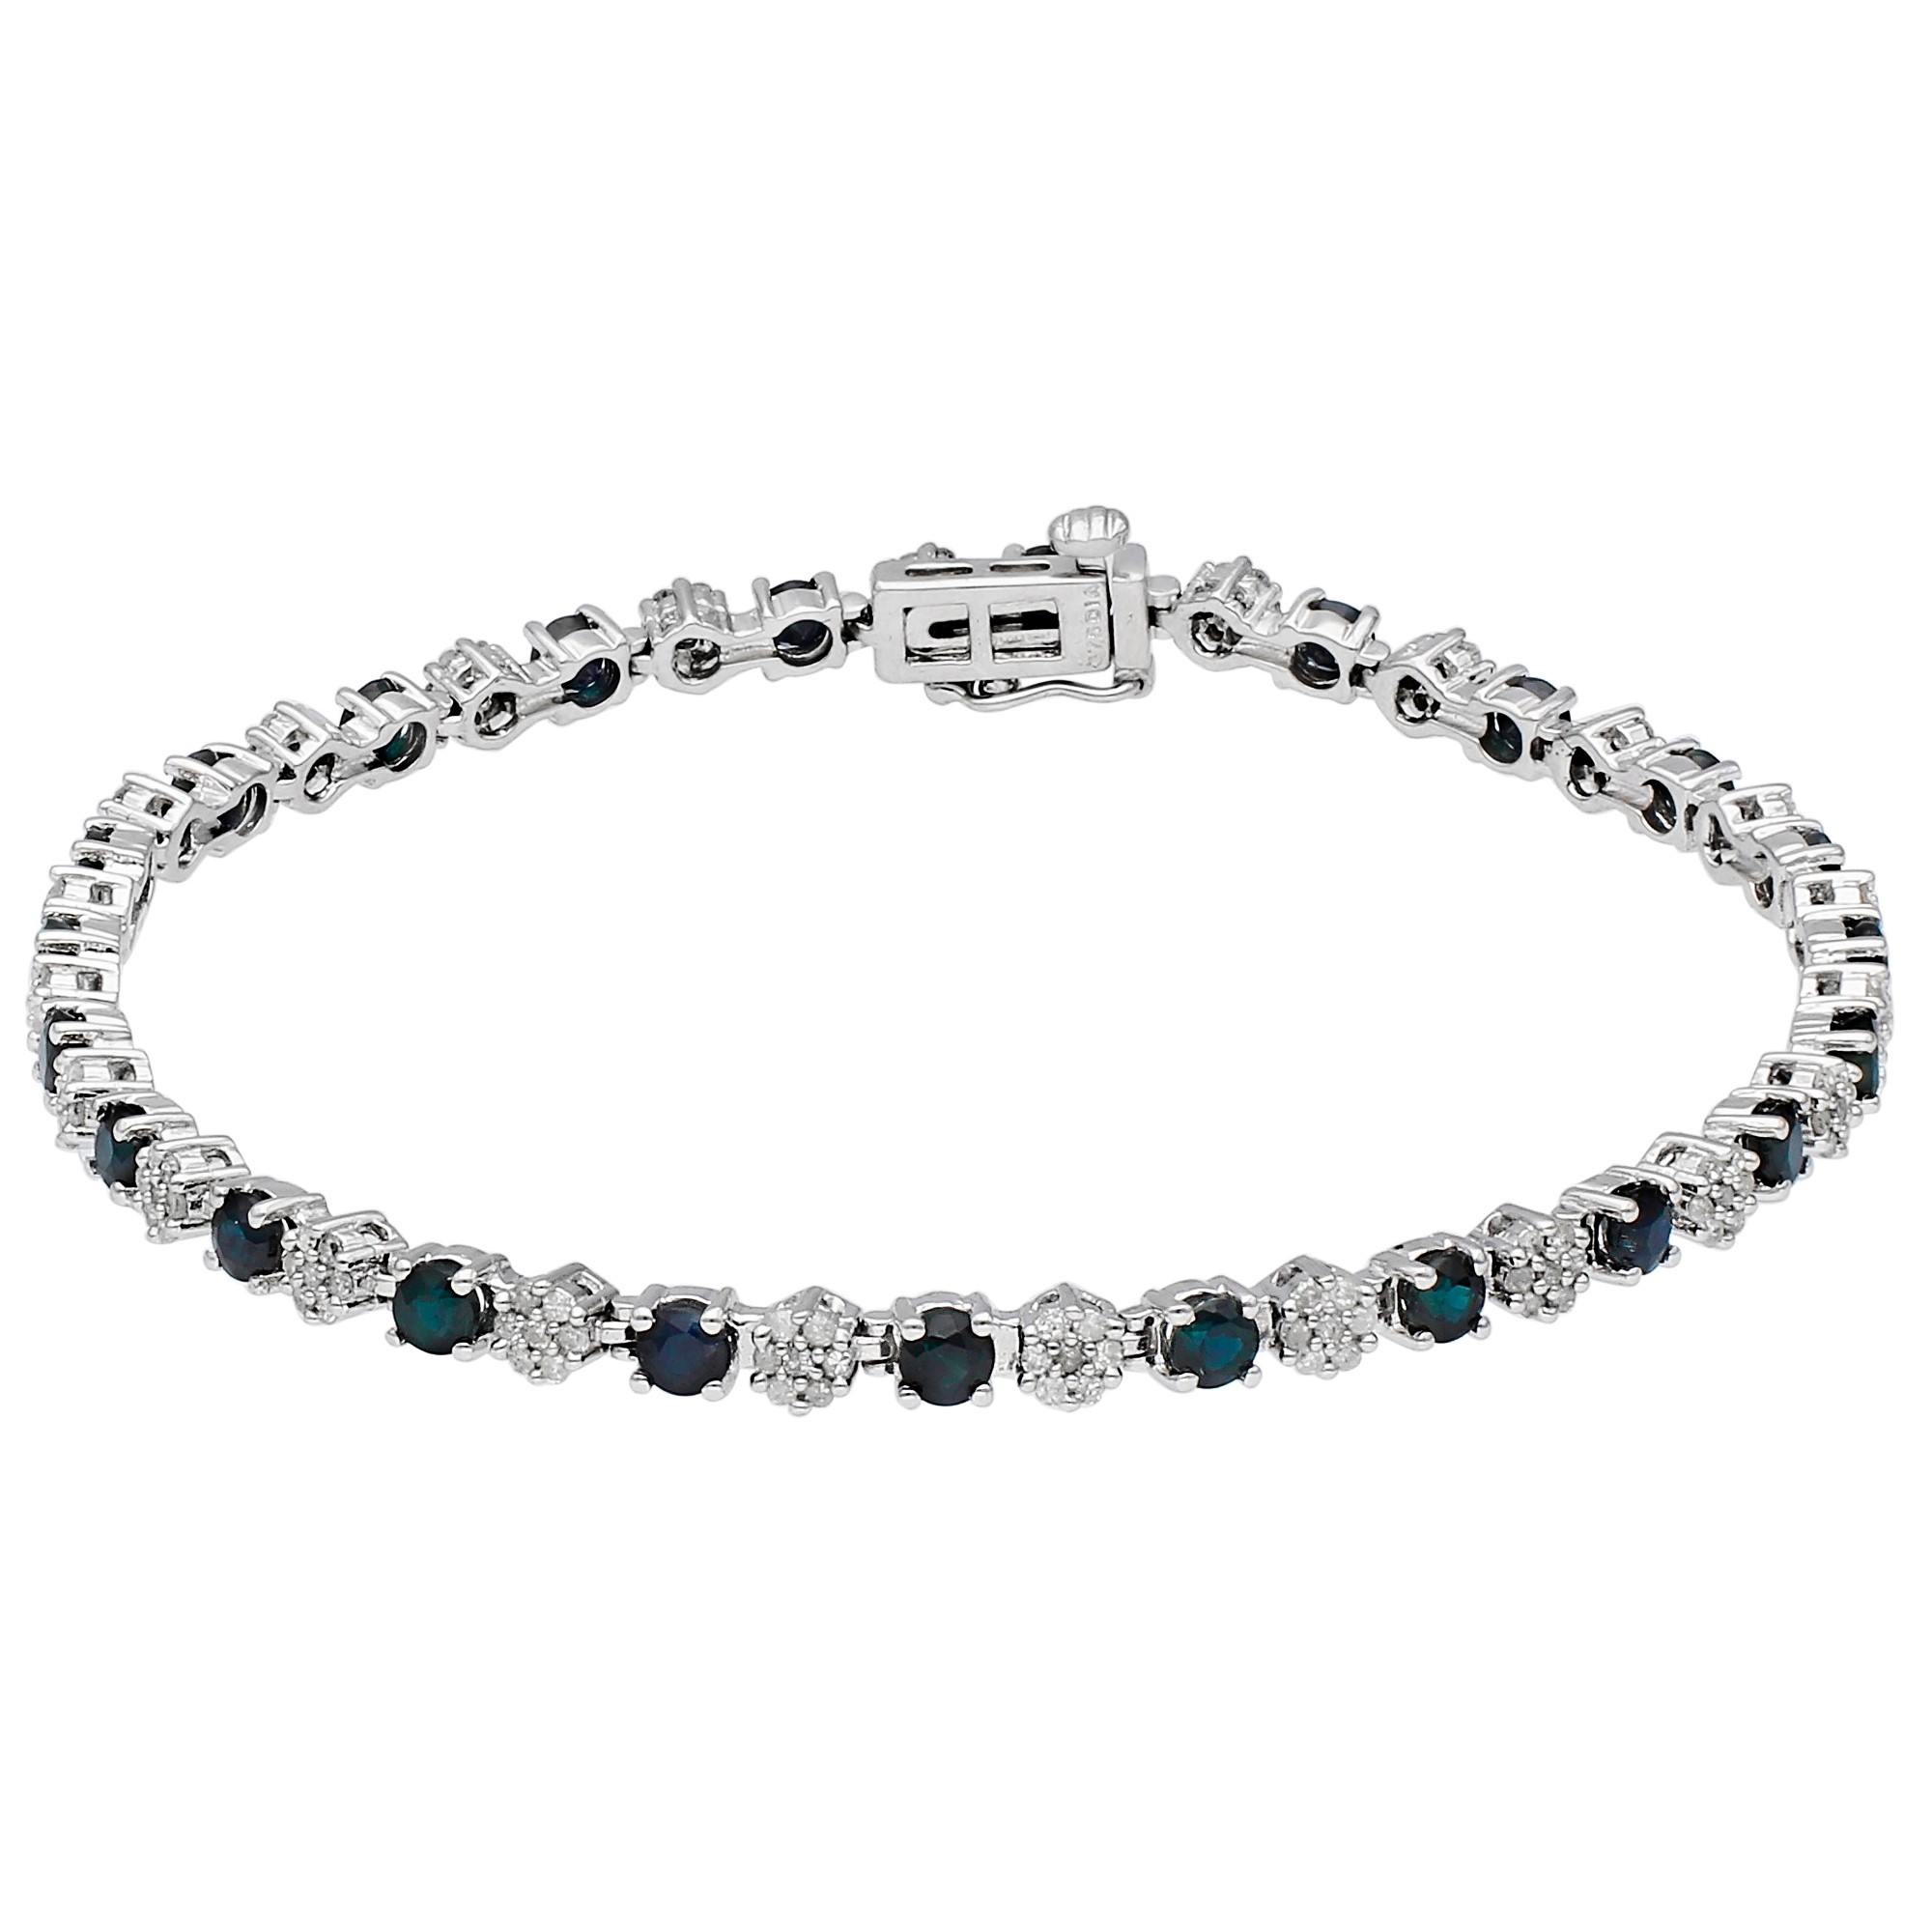 Share 69+ black sapphire bracelet latest - POPPY